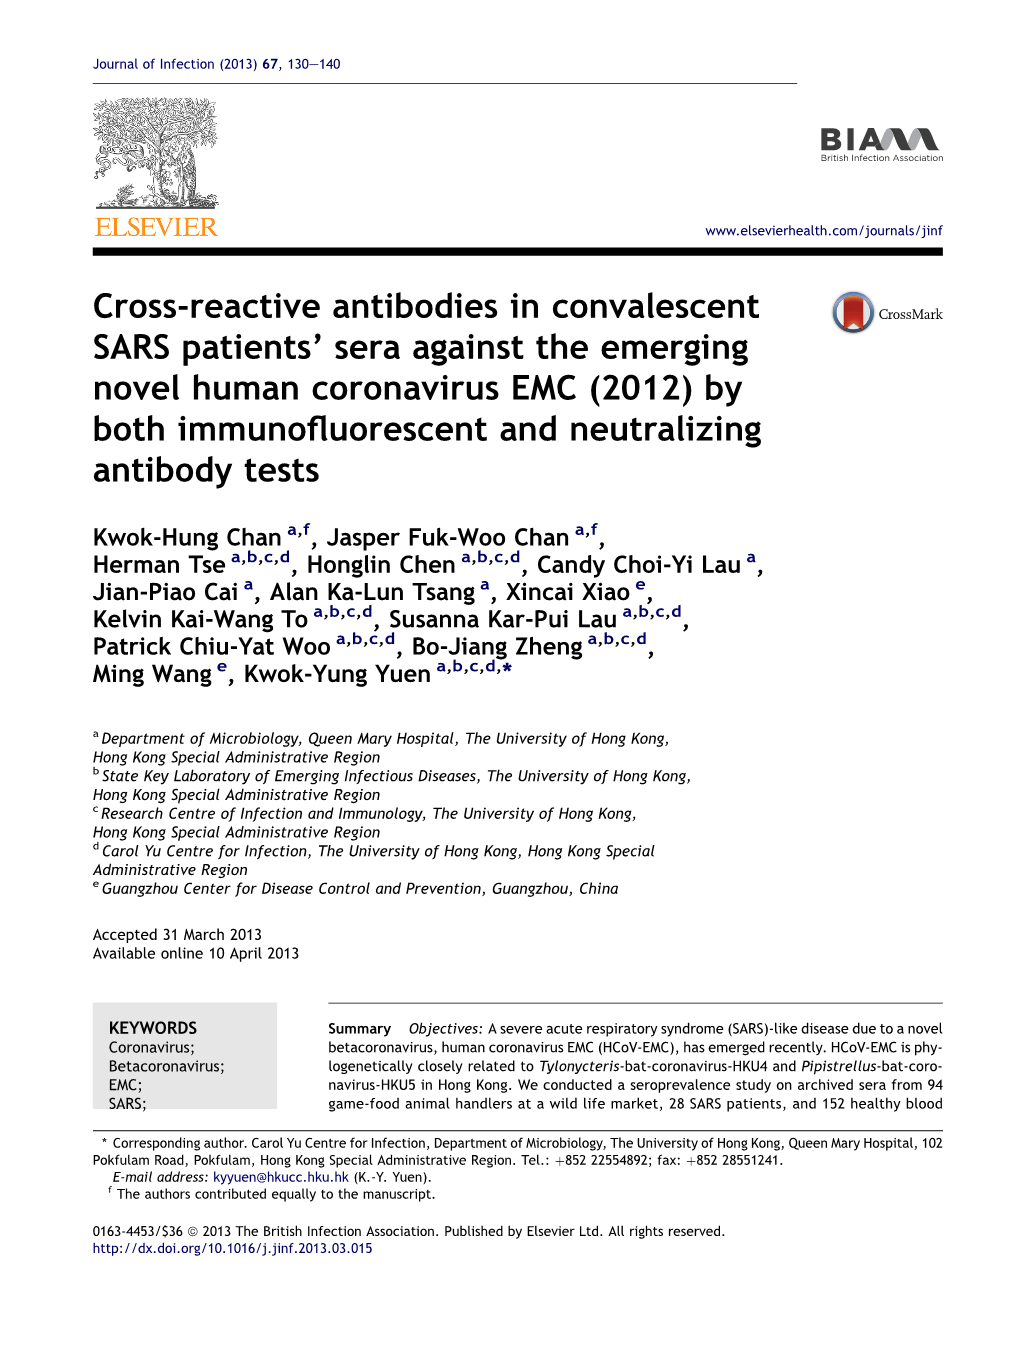 Cross-Reactive Antibodies in Convalescent SARS Patients' Sera